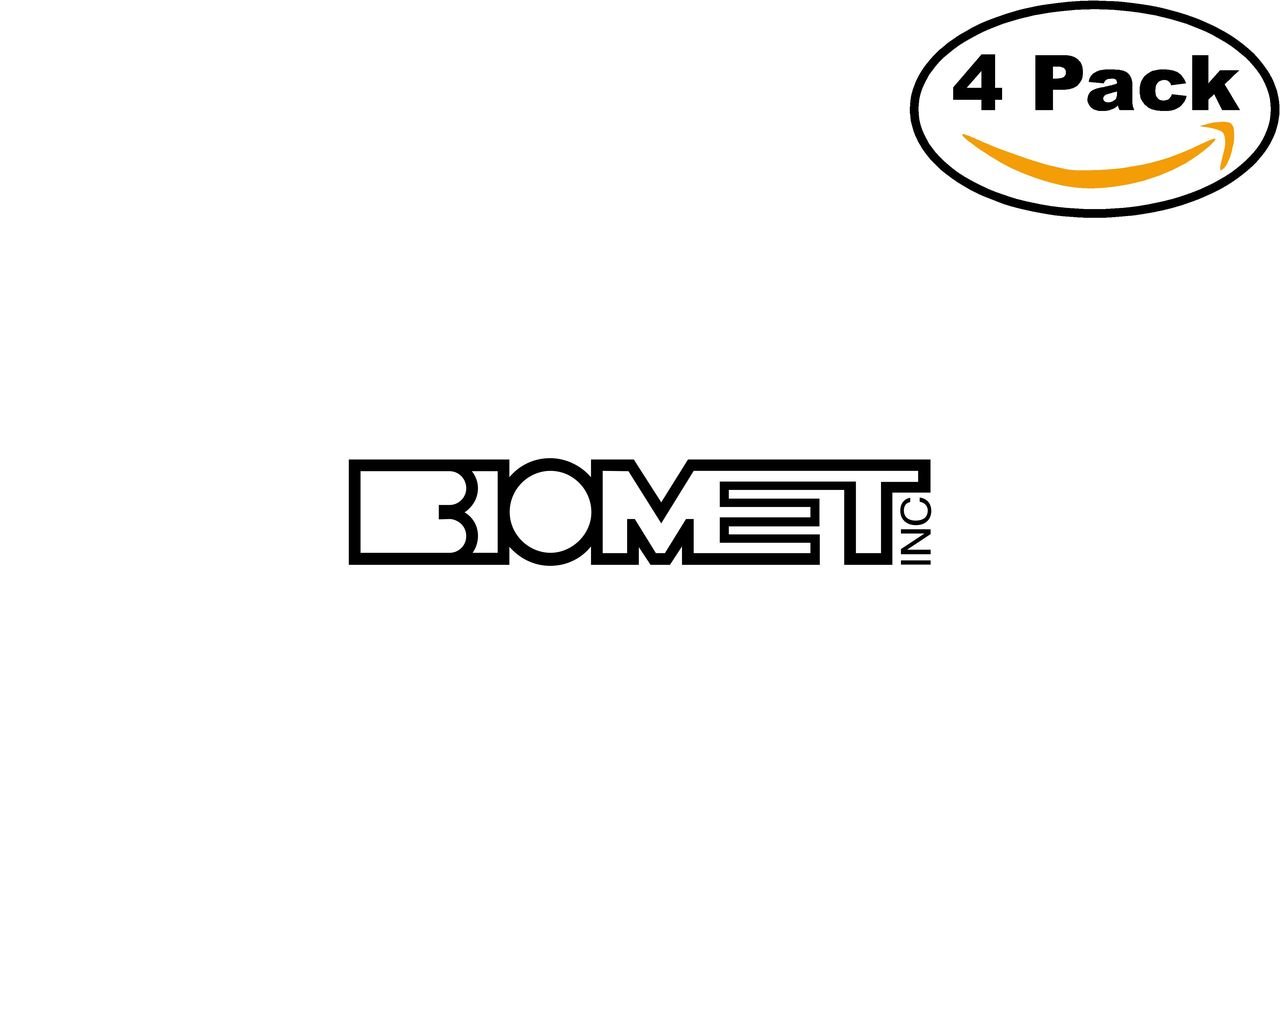 Amazon Biomet Stickers Inches Car Bumper Window Sticker